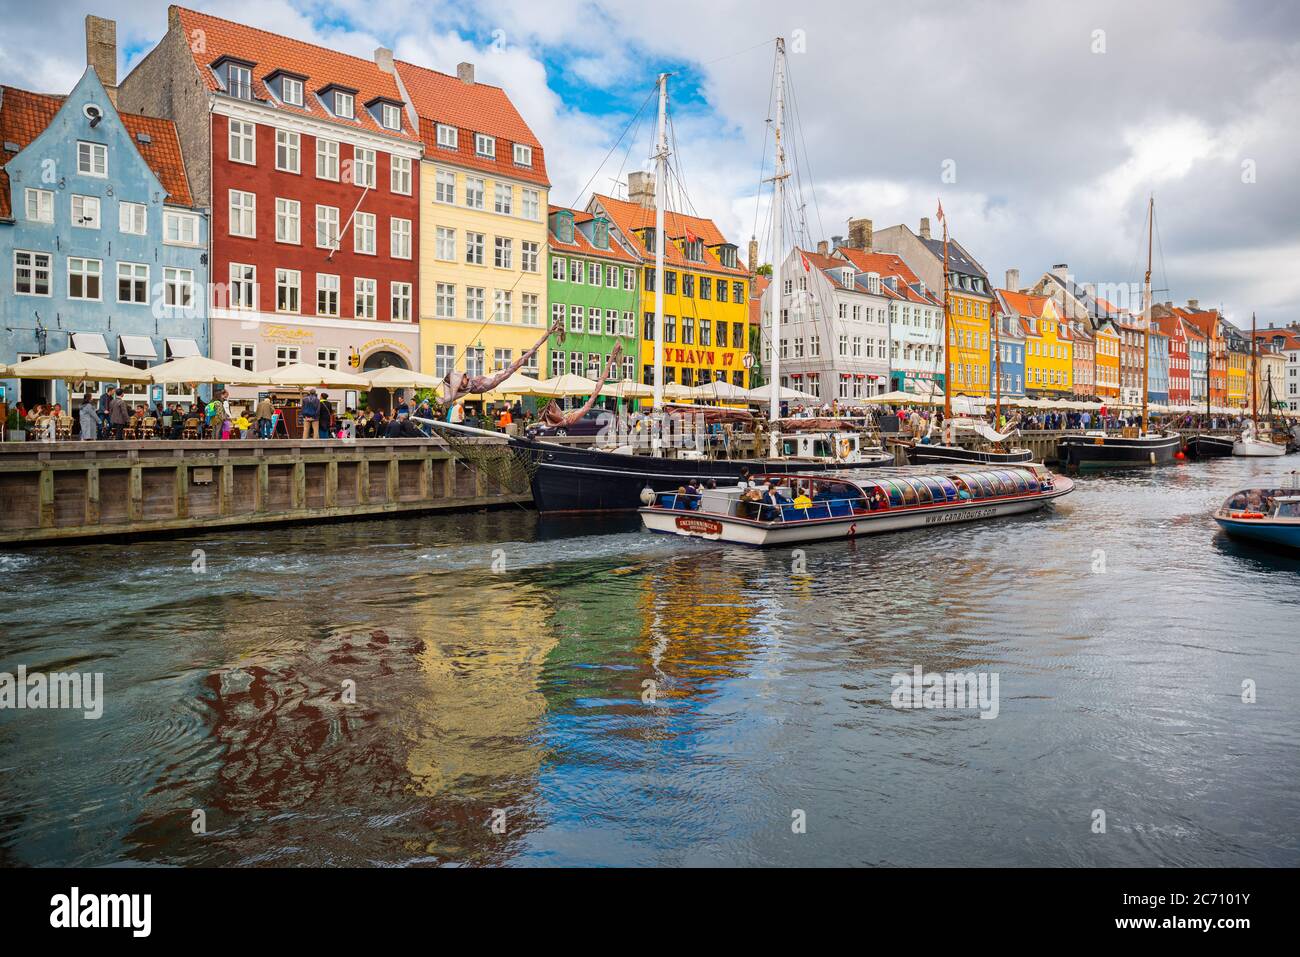 KOPENHAGEN, DÄNEMARK - 15. SEPTEMBER 2013: Die Menschenmassen genießen den historischen Nyhavn Kanal in Kopenhagen. Stockfoto